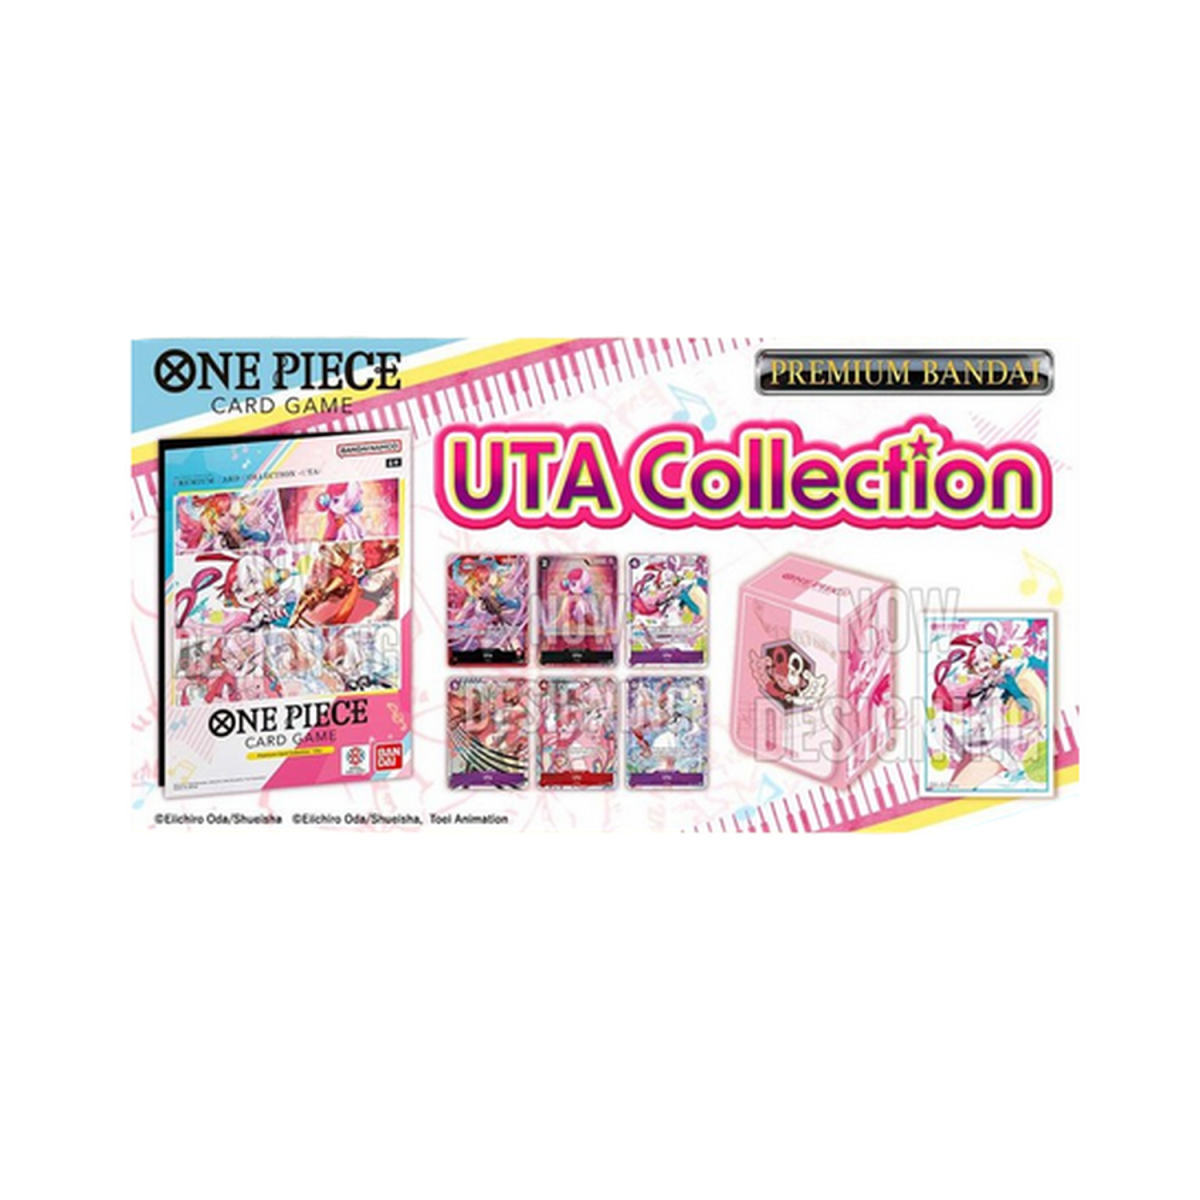 One Piece Card Game - Box Set - Uta Collection - English